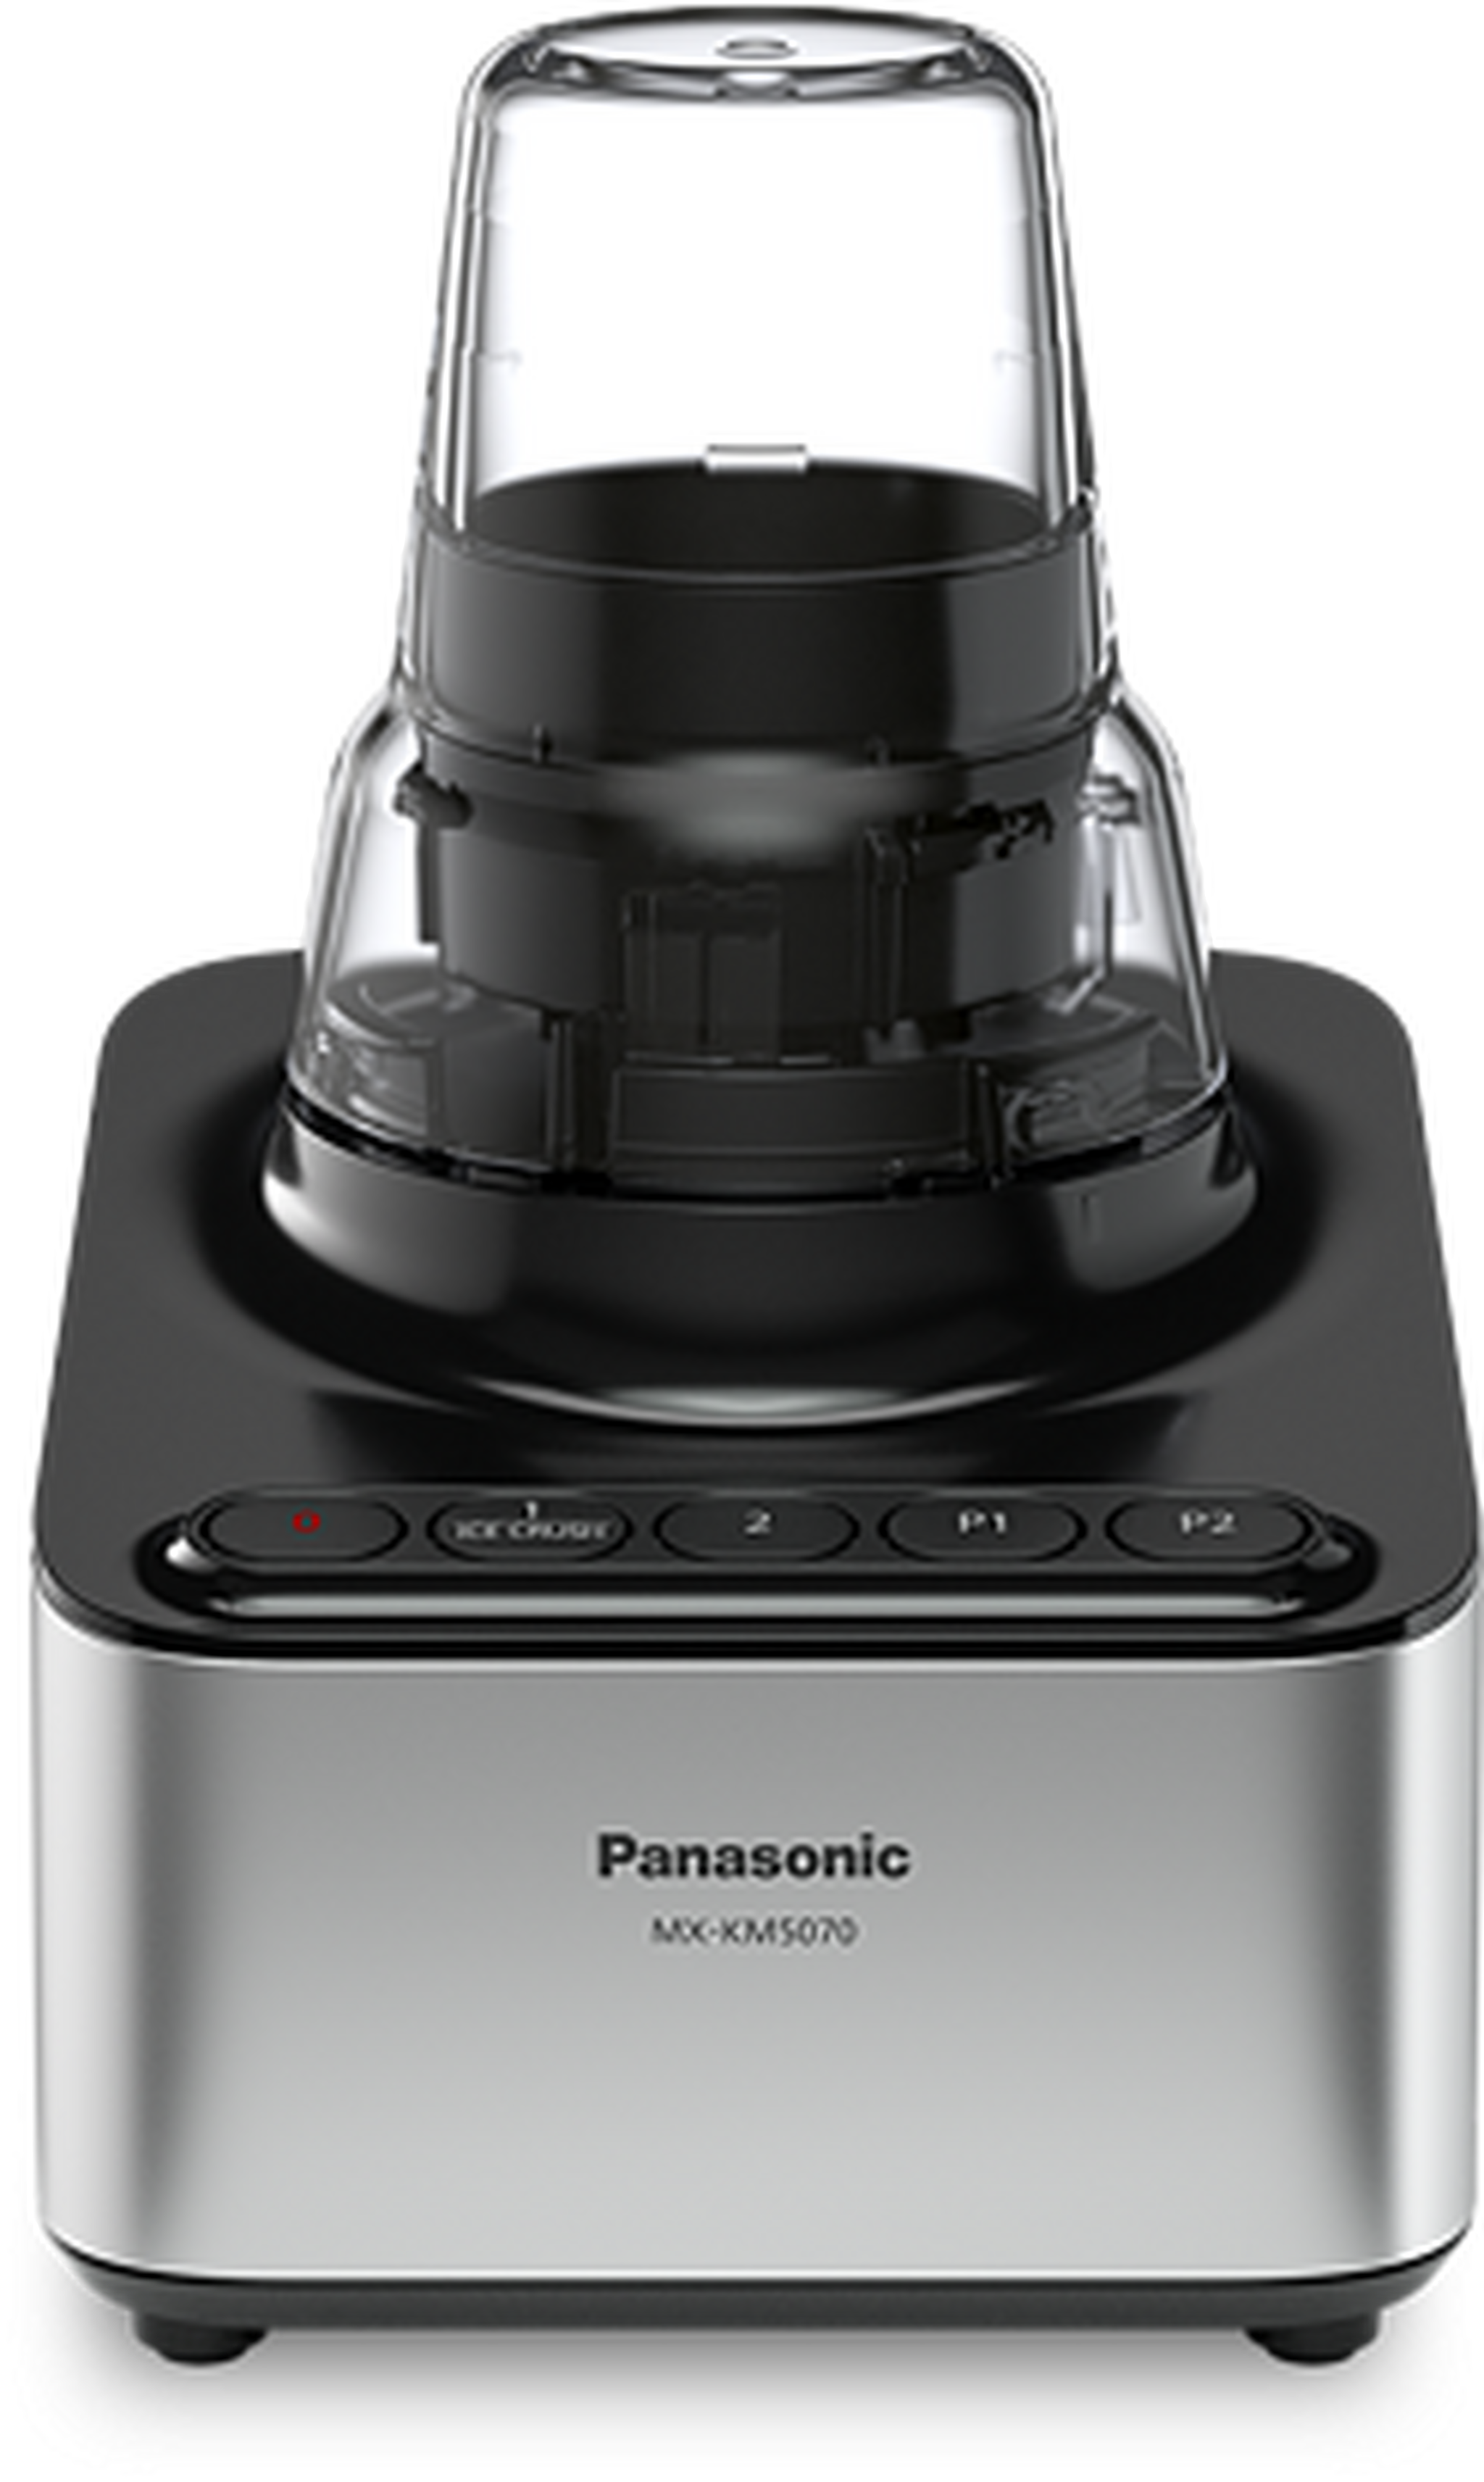 Panasonic  Blender with Glass Jar - 800W 1.5L (MX-KM5070STZ)